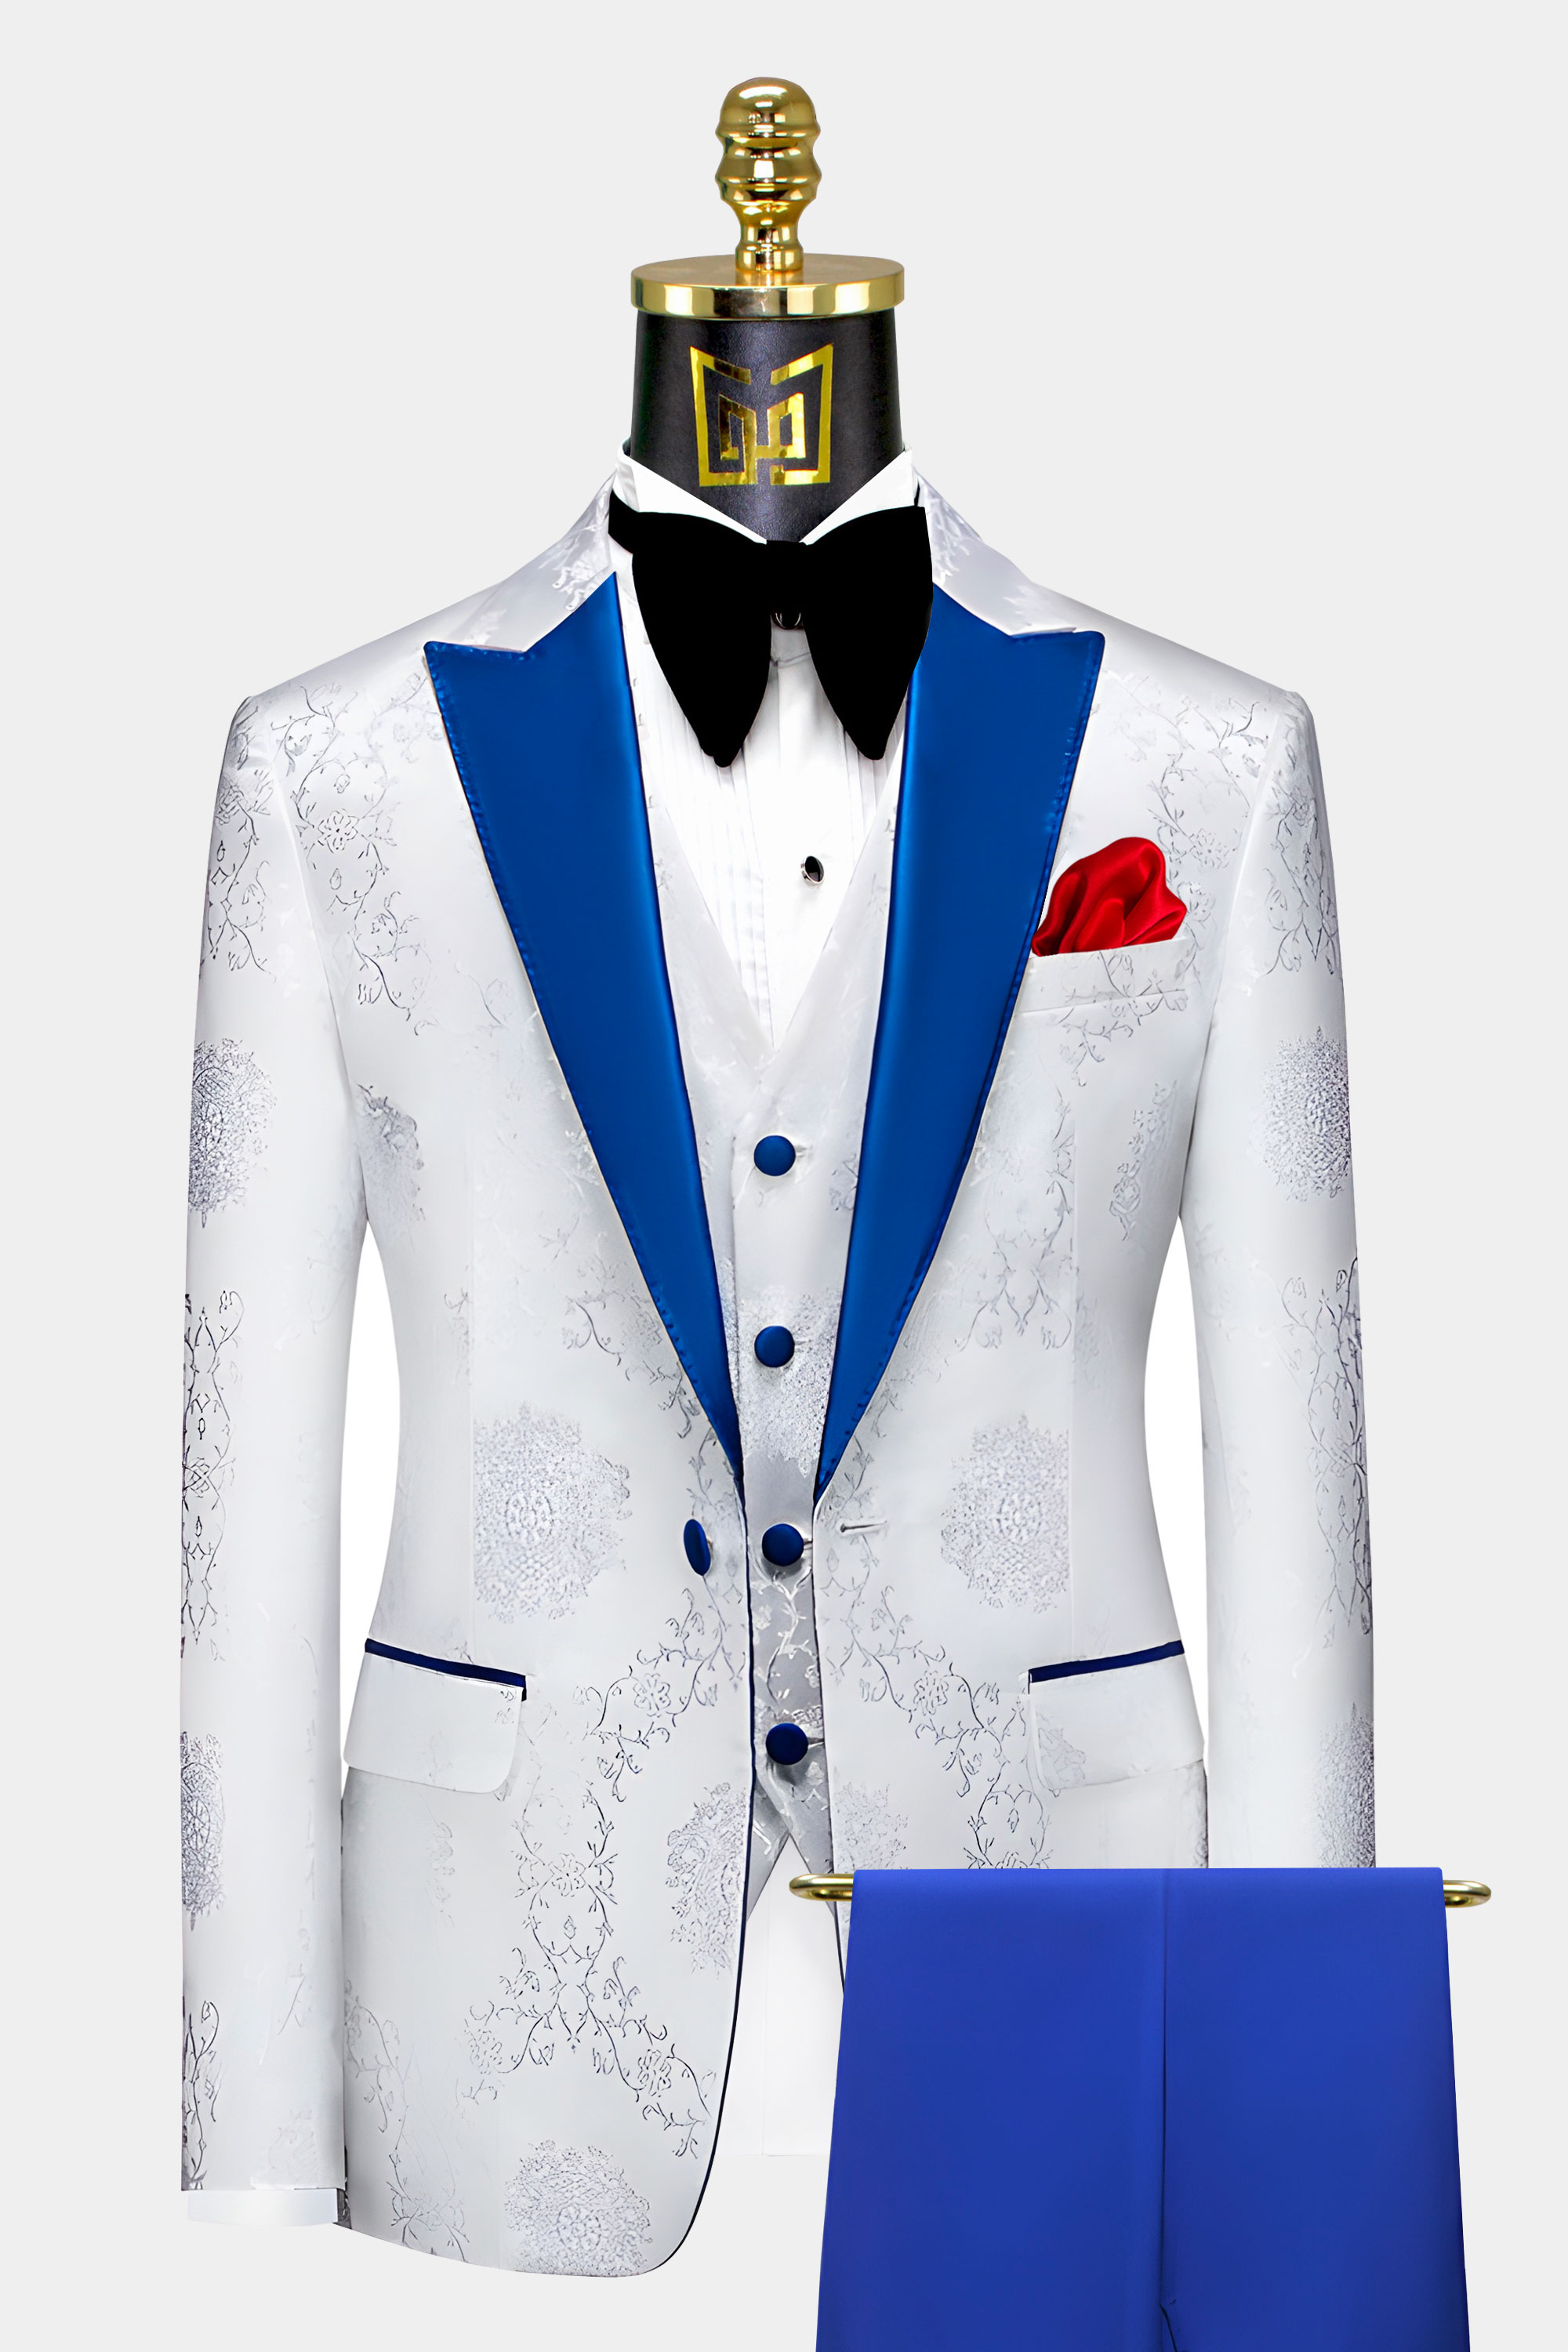 Royal-Blue-and-White-Tuxedo-Groom-Wedding-Suit-for-Men-from-Gentlemansguru.com